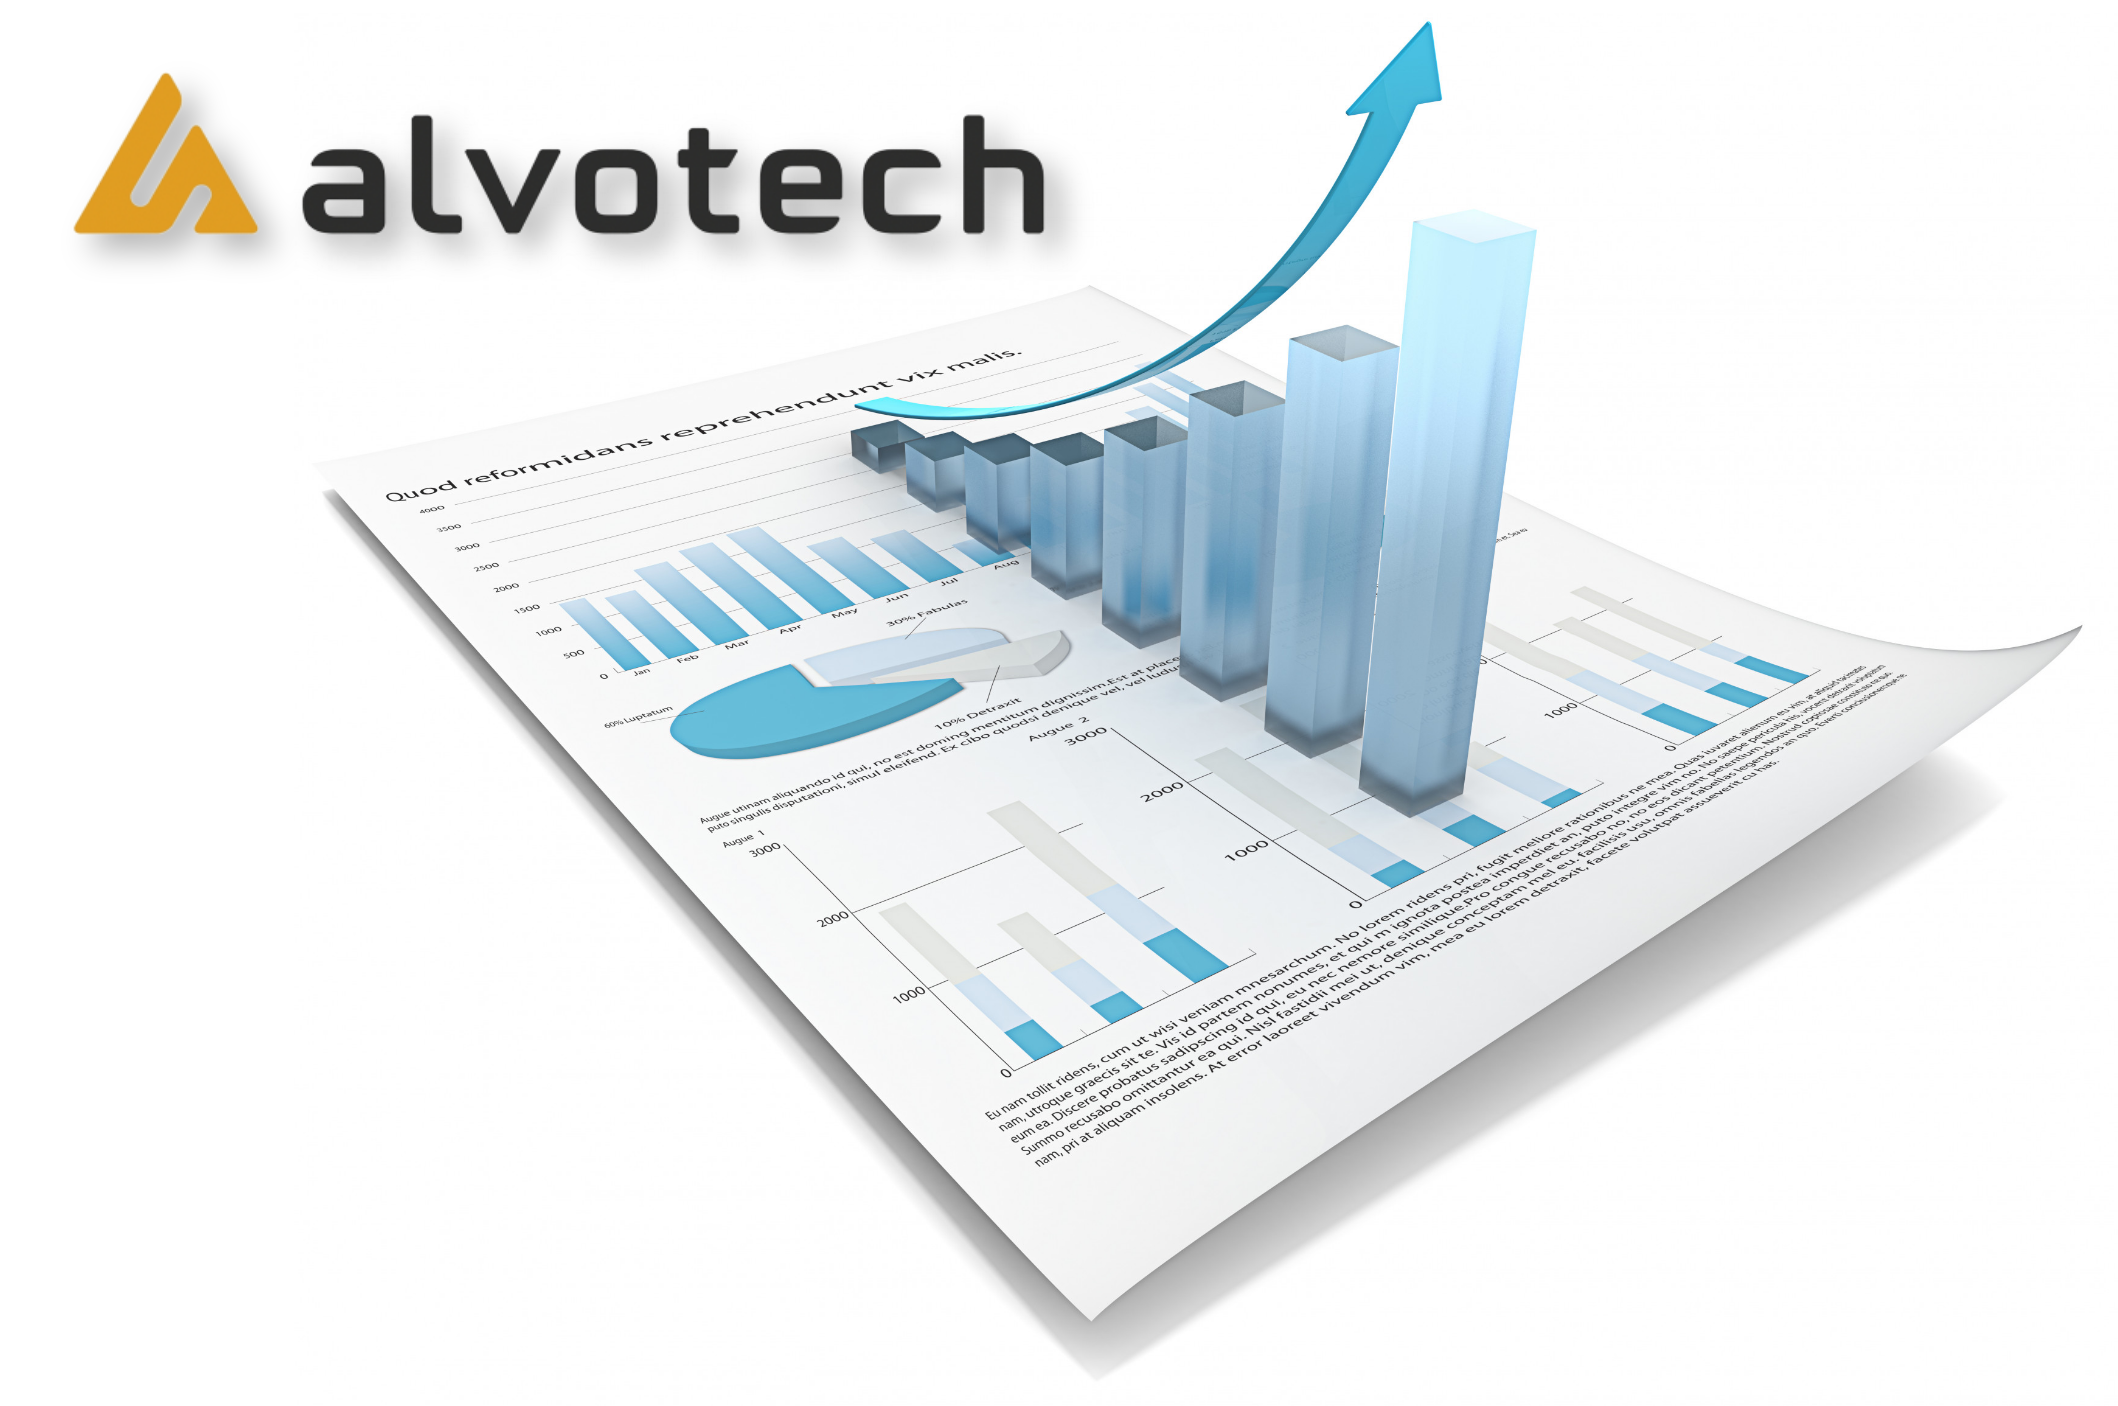 stock market image and the alvotech logo